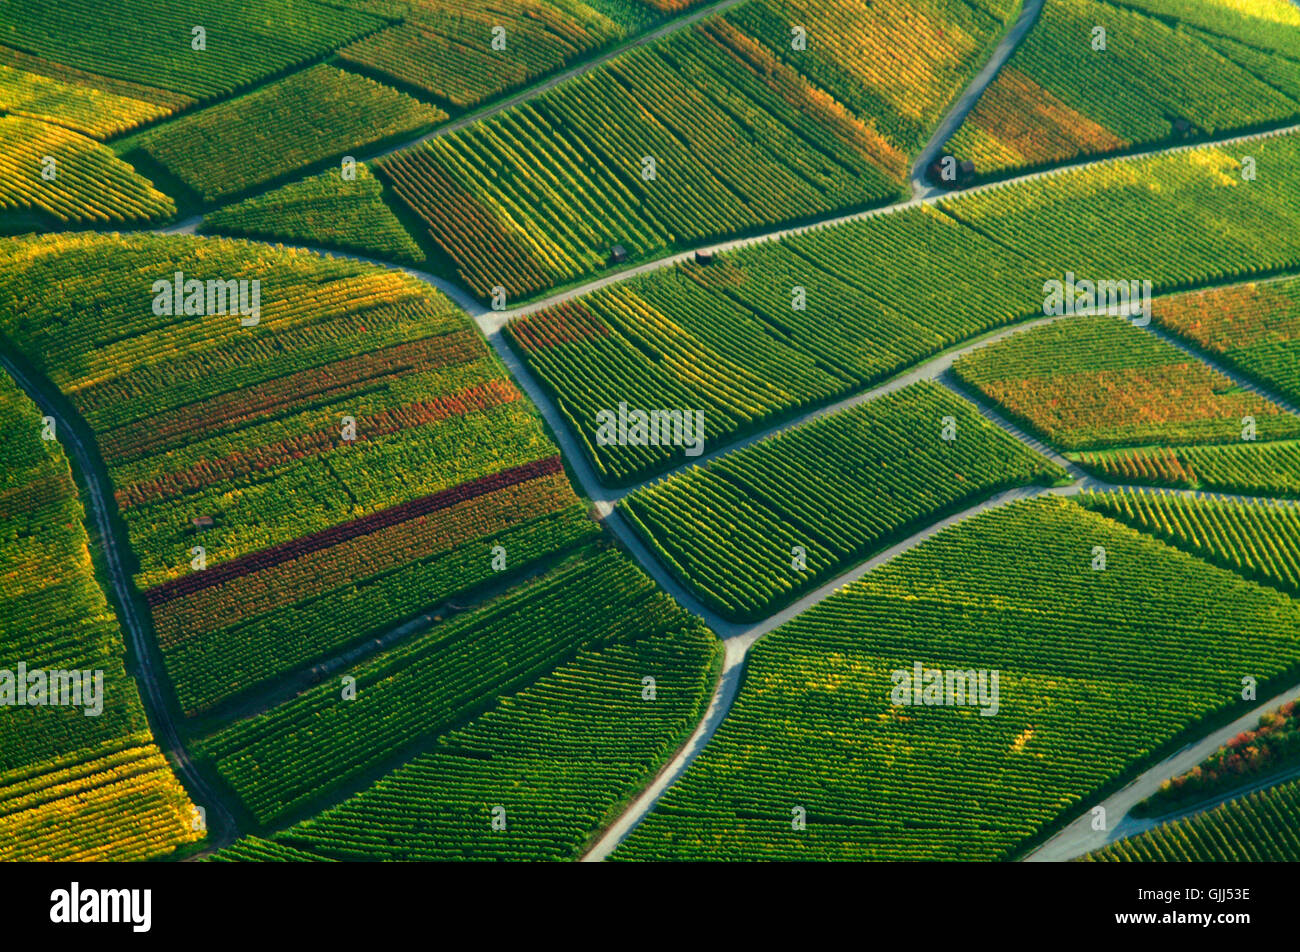 Weinbaulandschaft,vue aérienne Banque D'Images